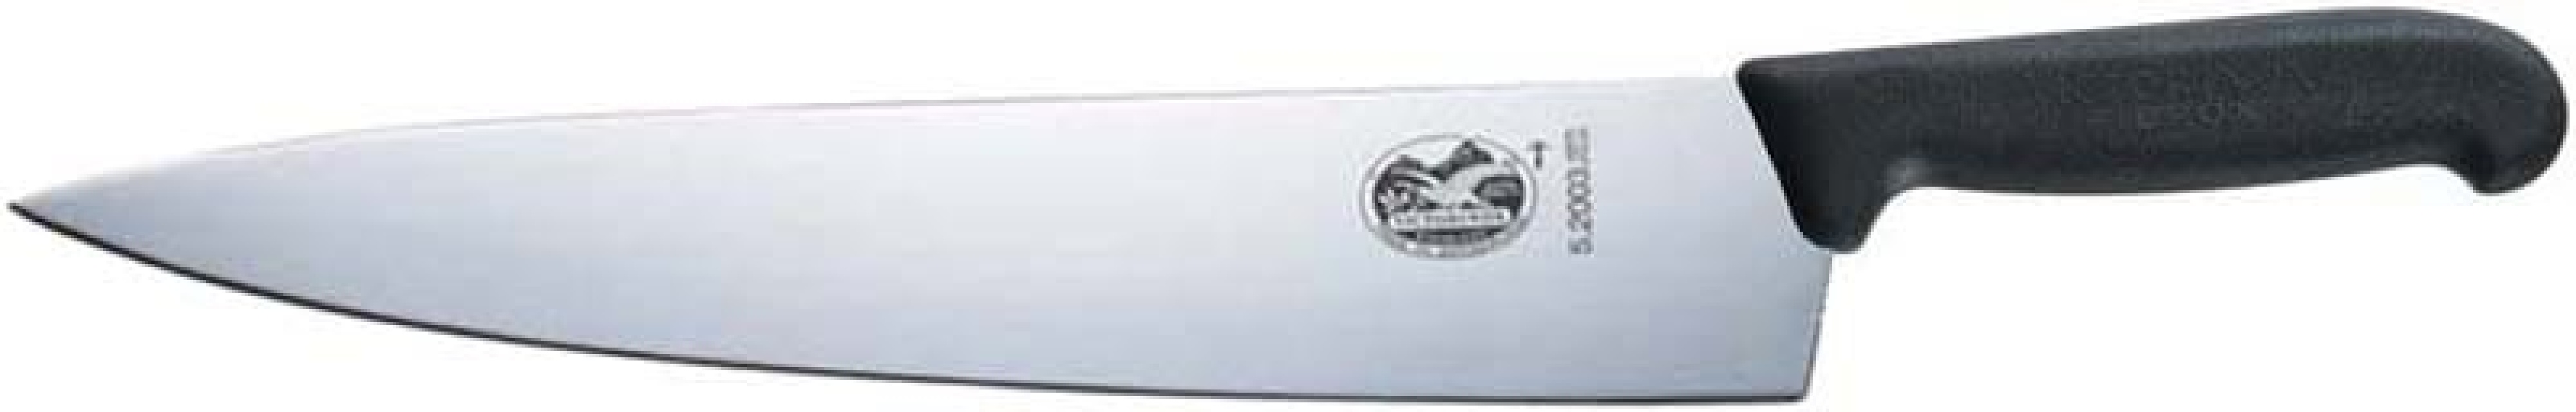 Kokkekniv Victorinox 31 cm / fibrox skaft